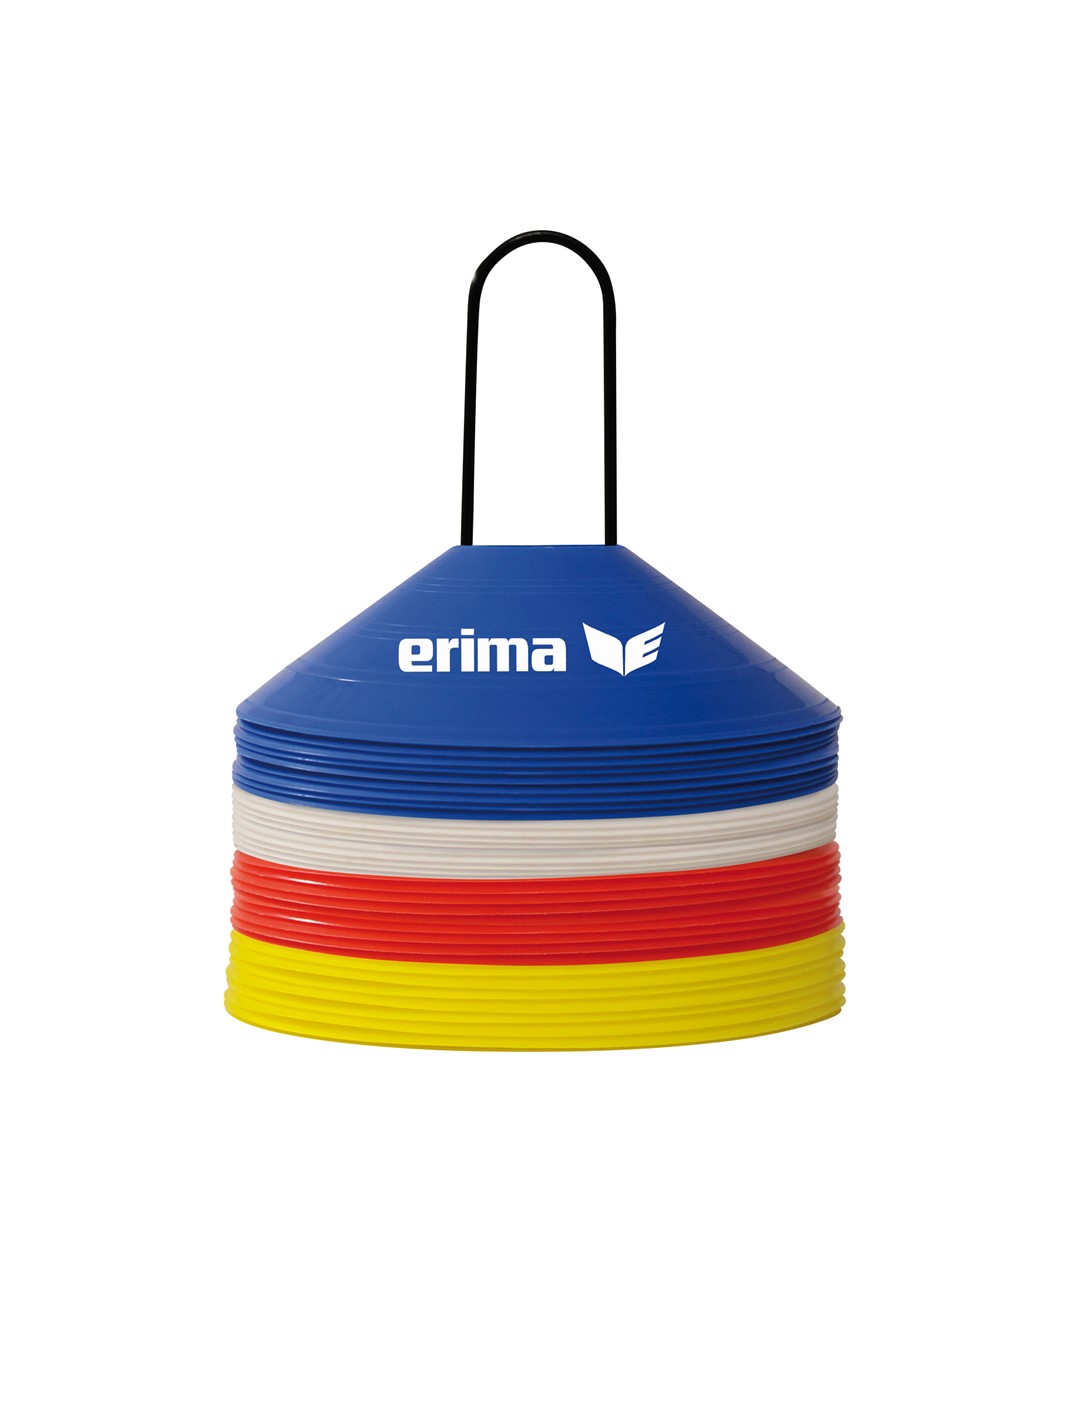 724104 Erima Marker cones set - Akcesoria